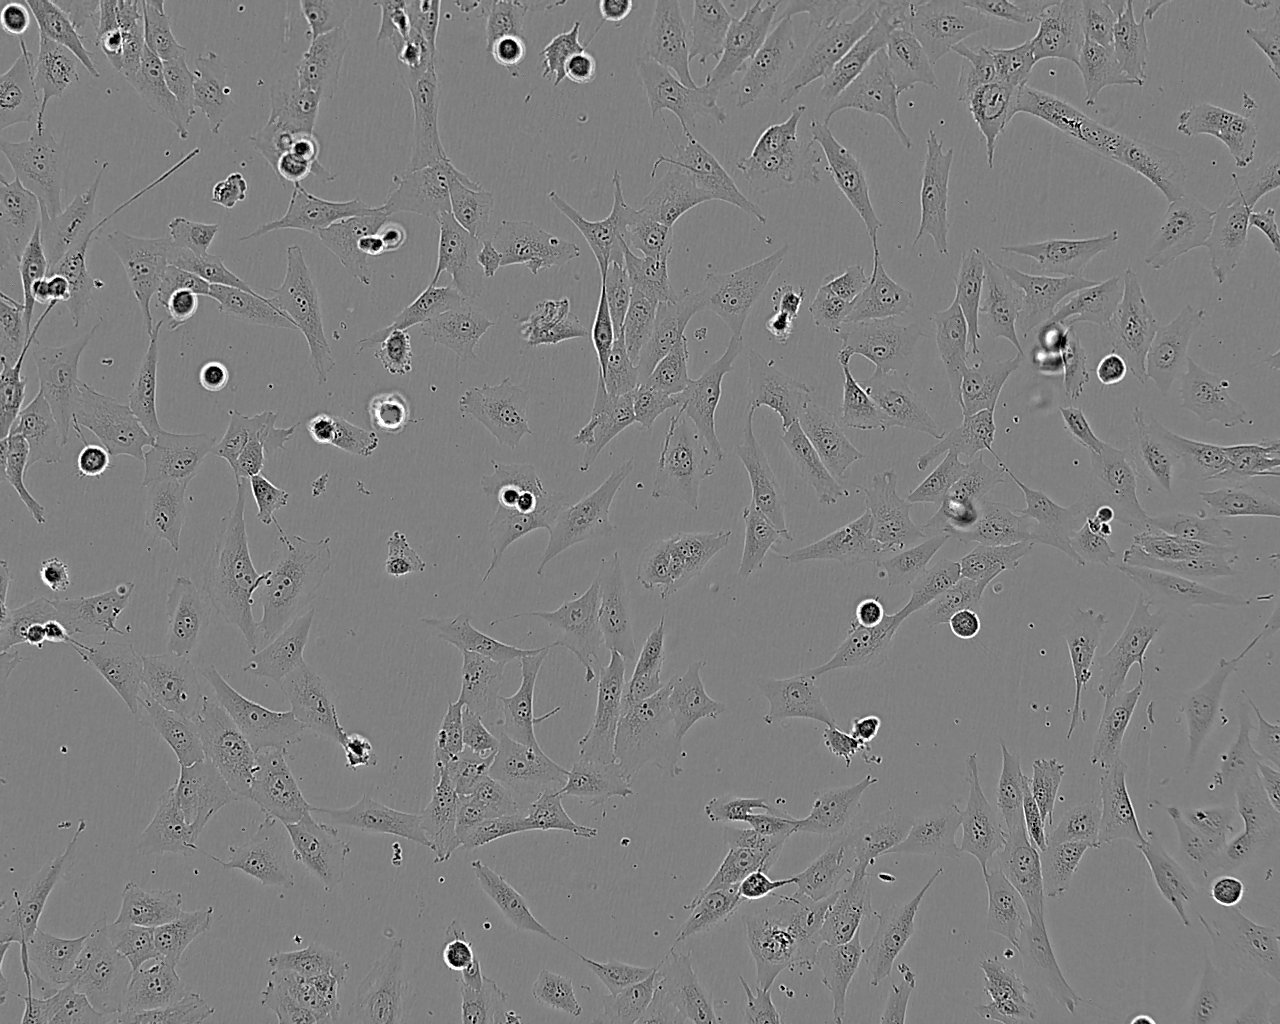 MUS-M1 Cell:小鼠小肠平滑肌细胞系